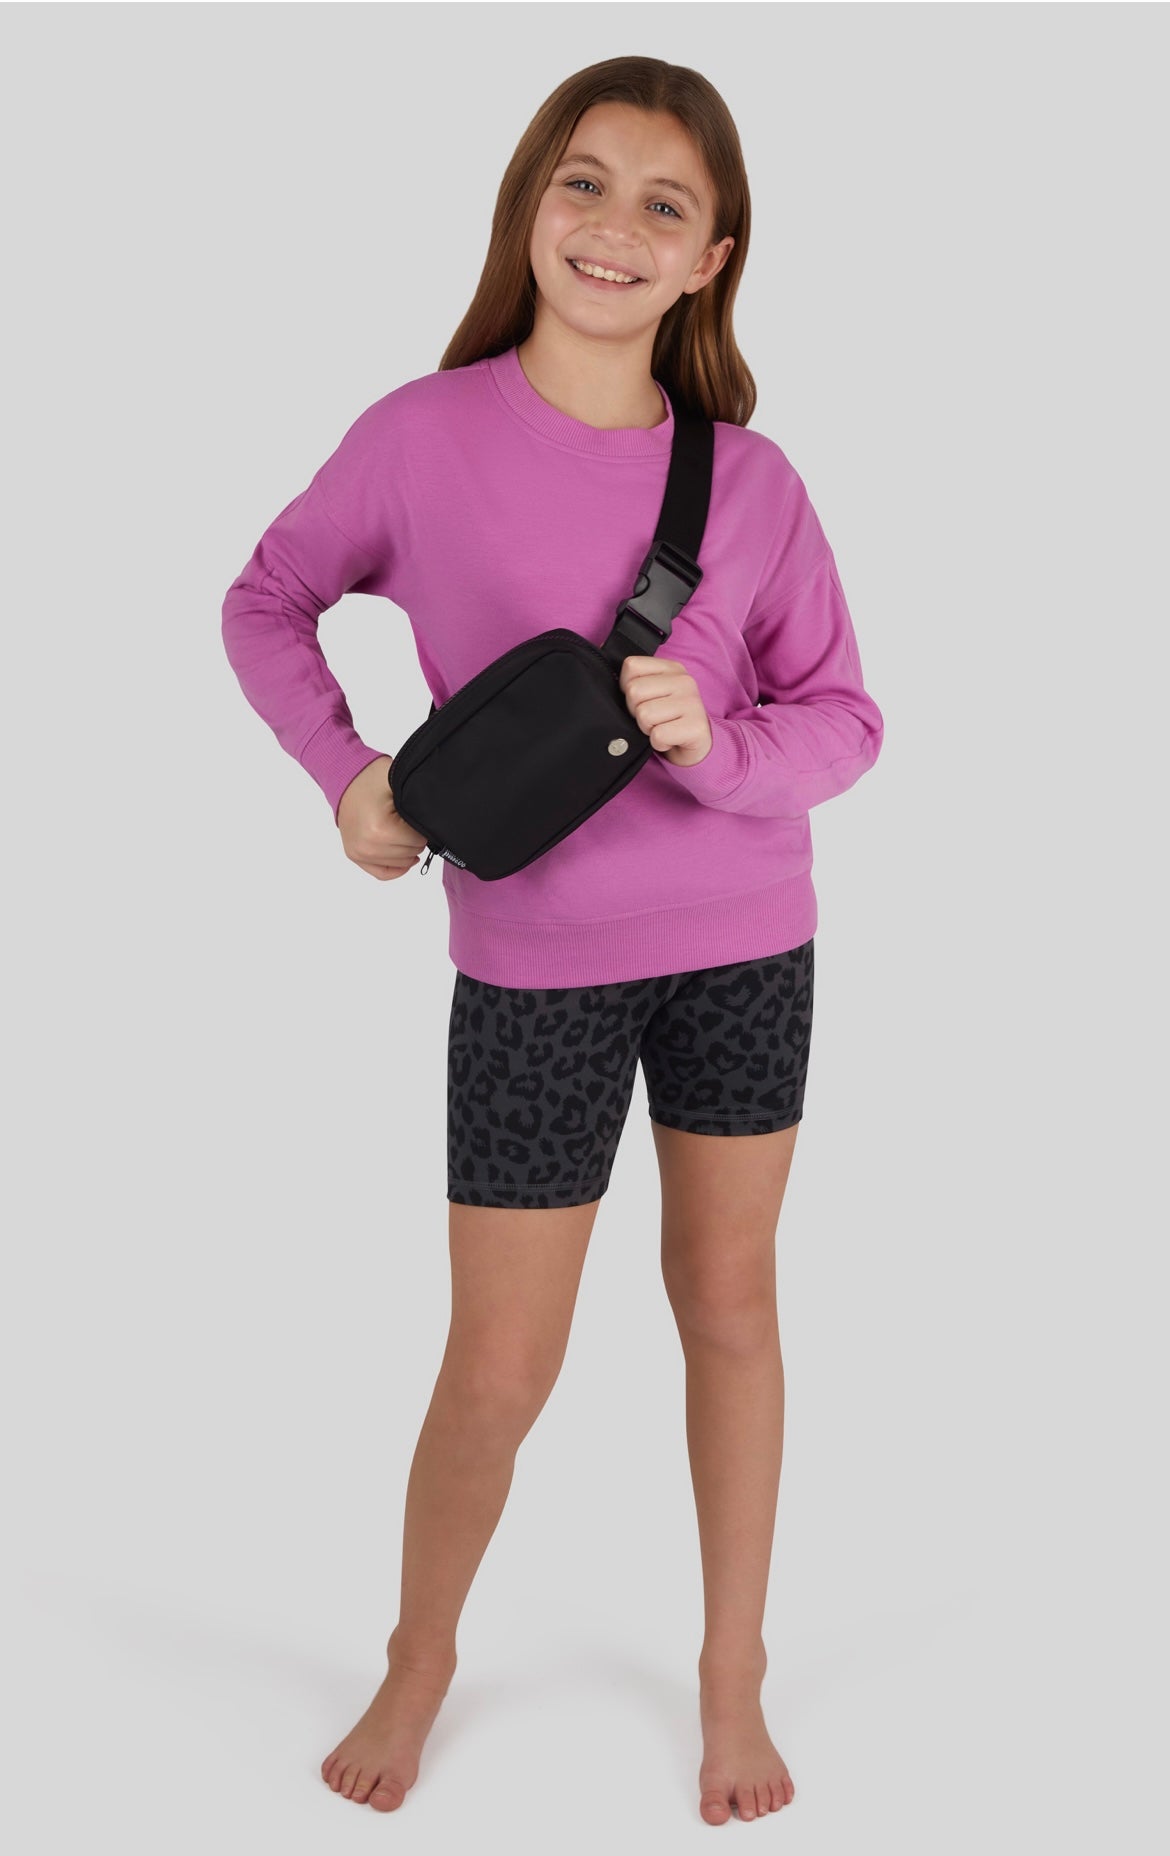 Girls Crew Sweatshirt, Basic Biker Shorts, & Belt Bag SET